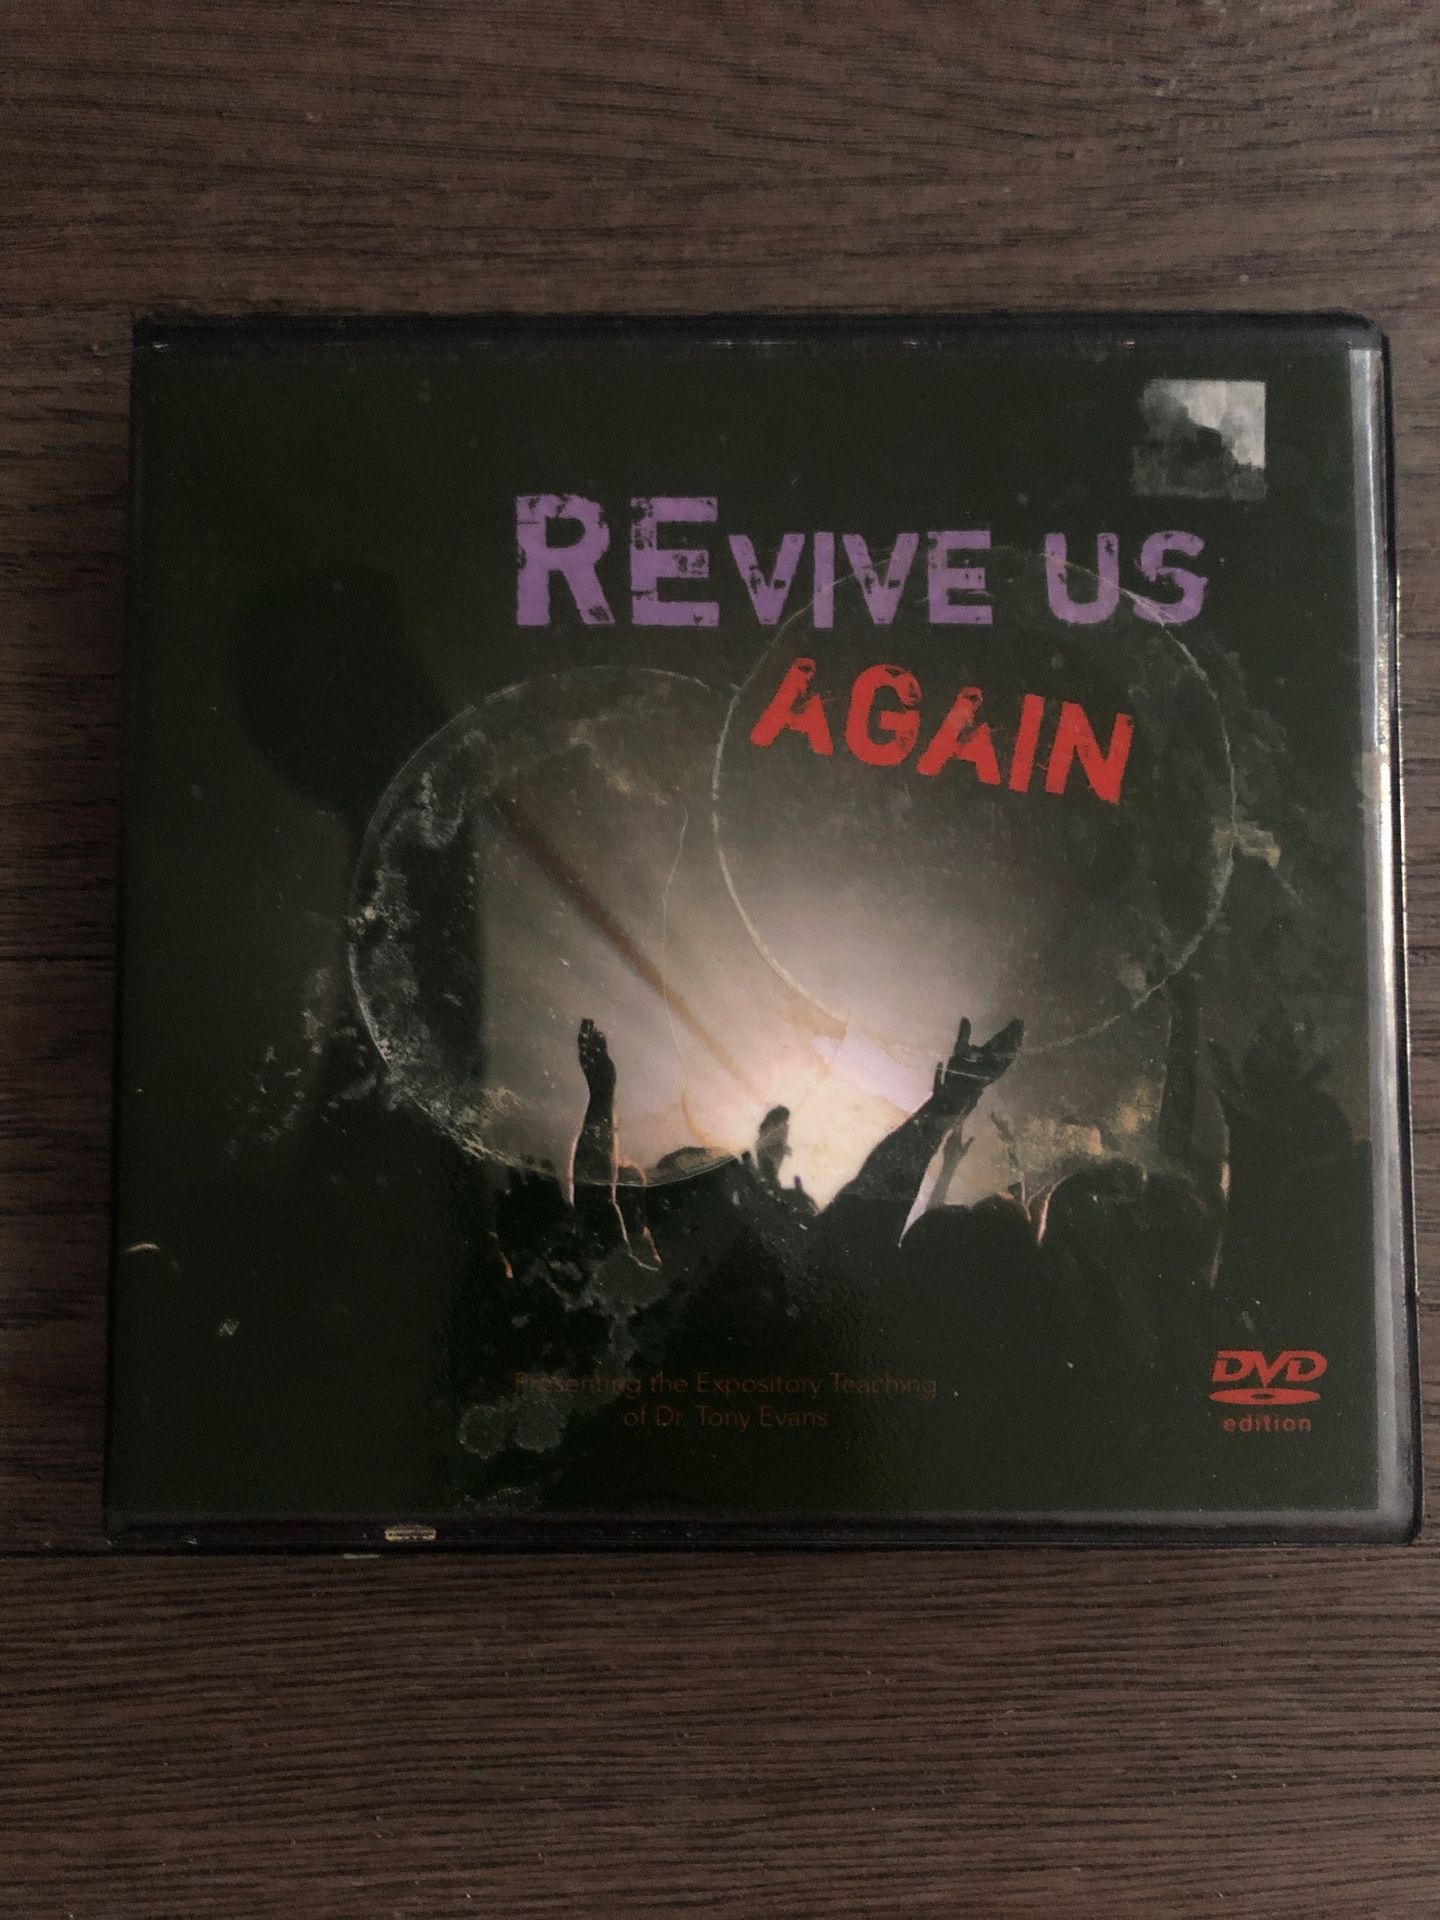 Dr Tony Evans Revive Us Again 14 DVD sermons